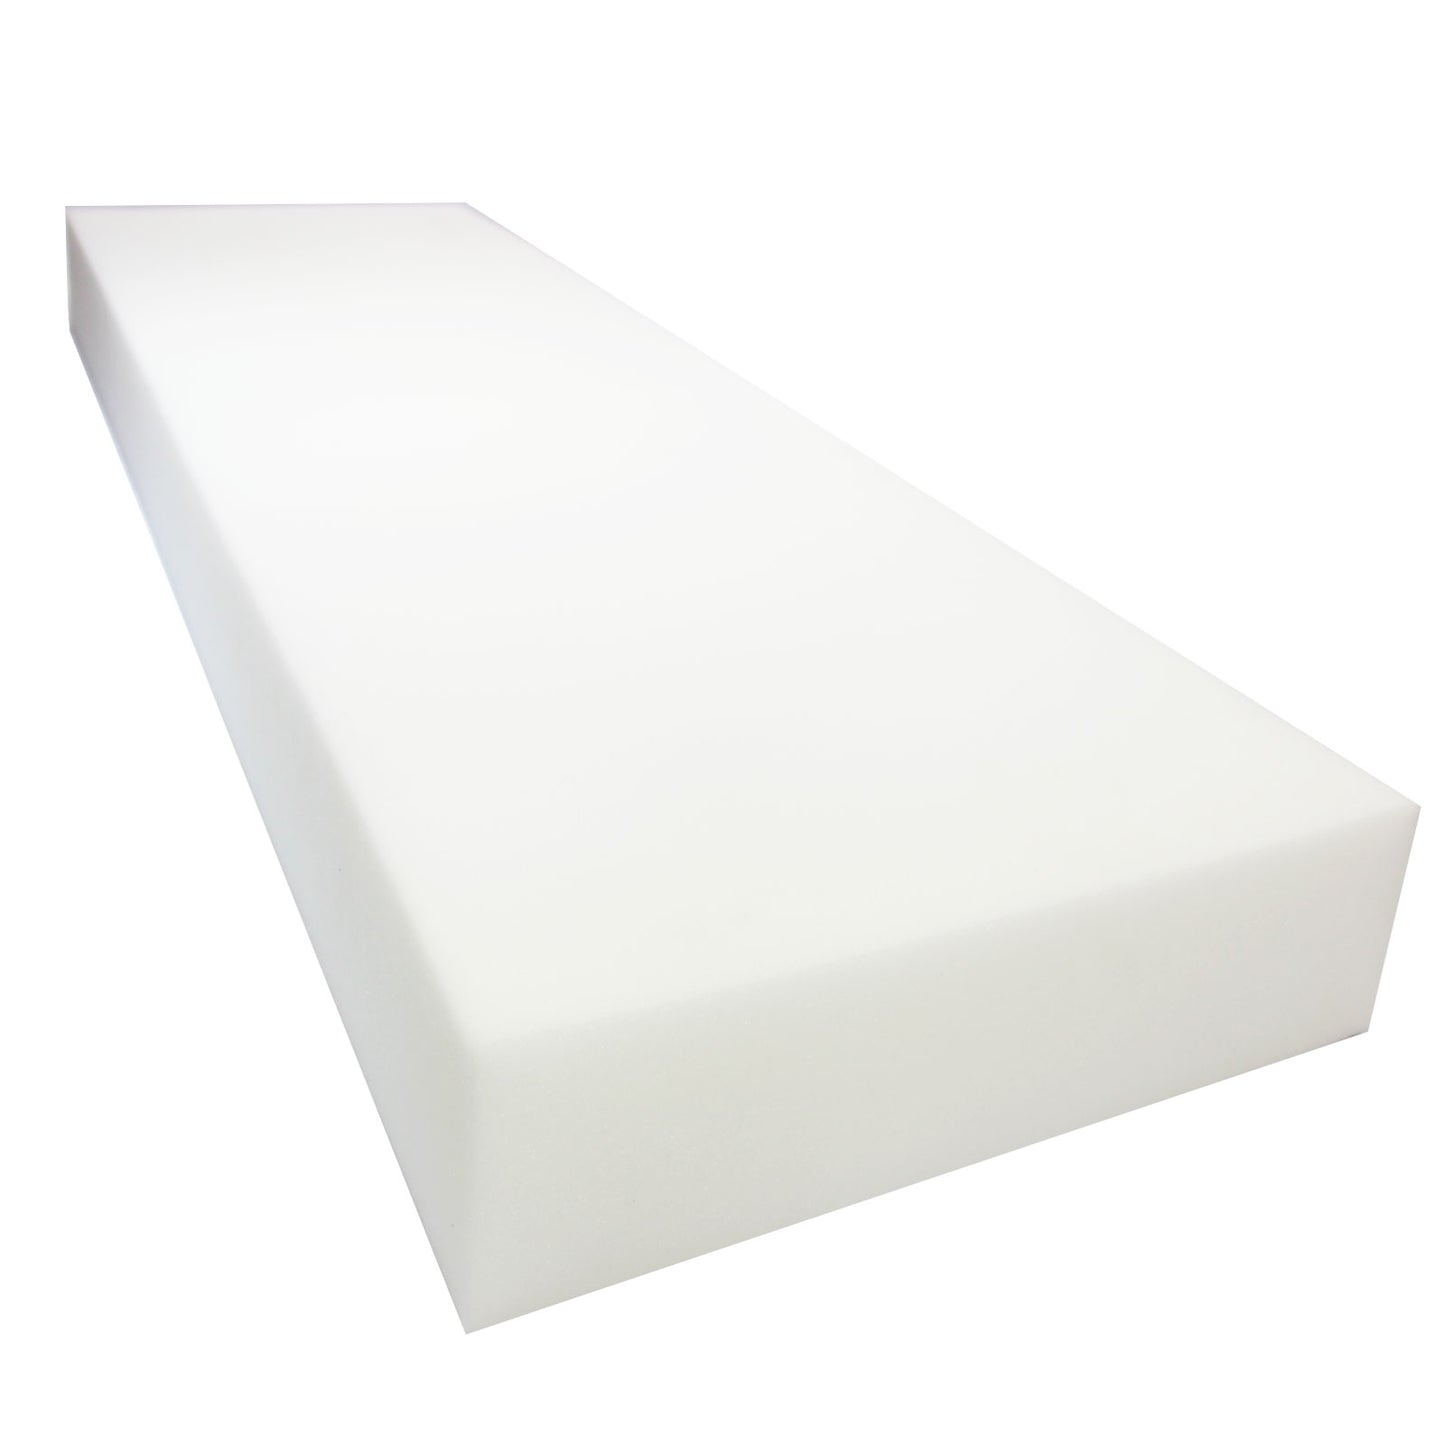 Mybecca 6" x 24" x 24" High Density Upholstery Foam Cushion (Seat Replacement, Upholstery Sheet, Foam Padding)